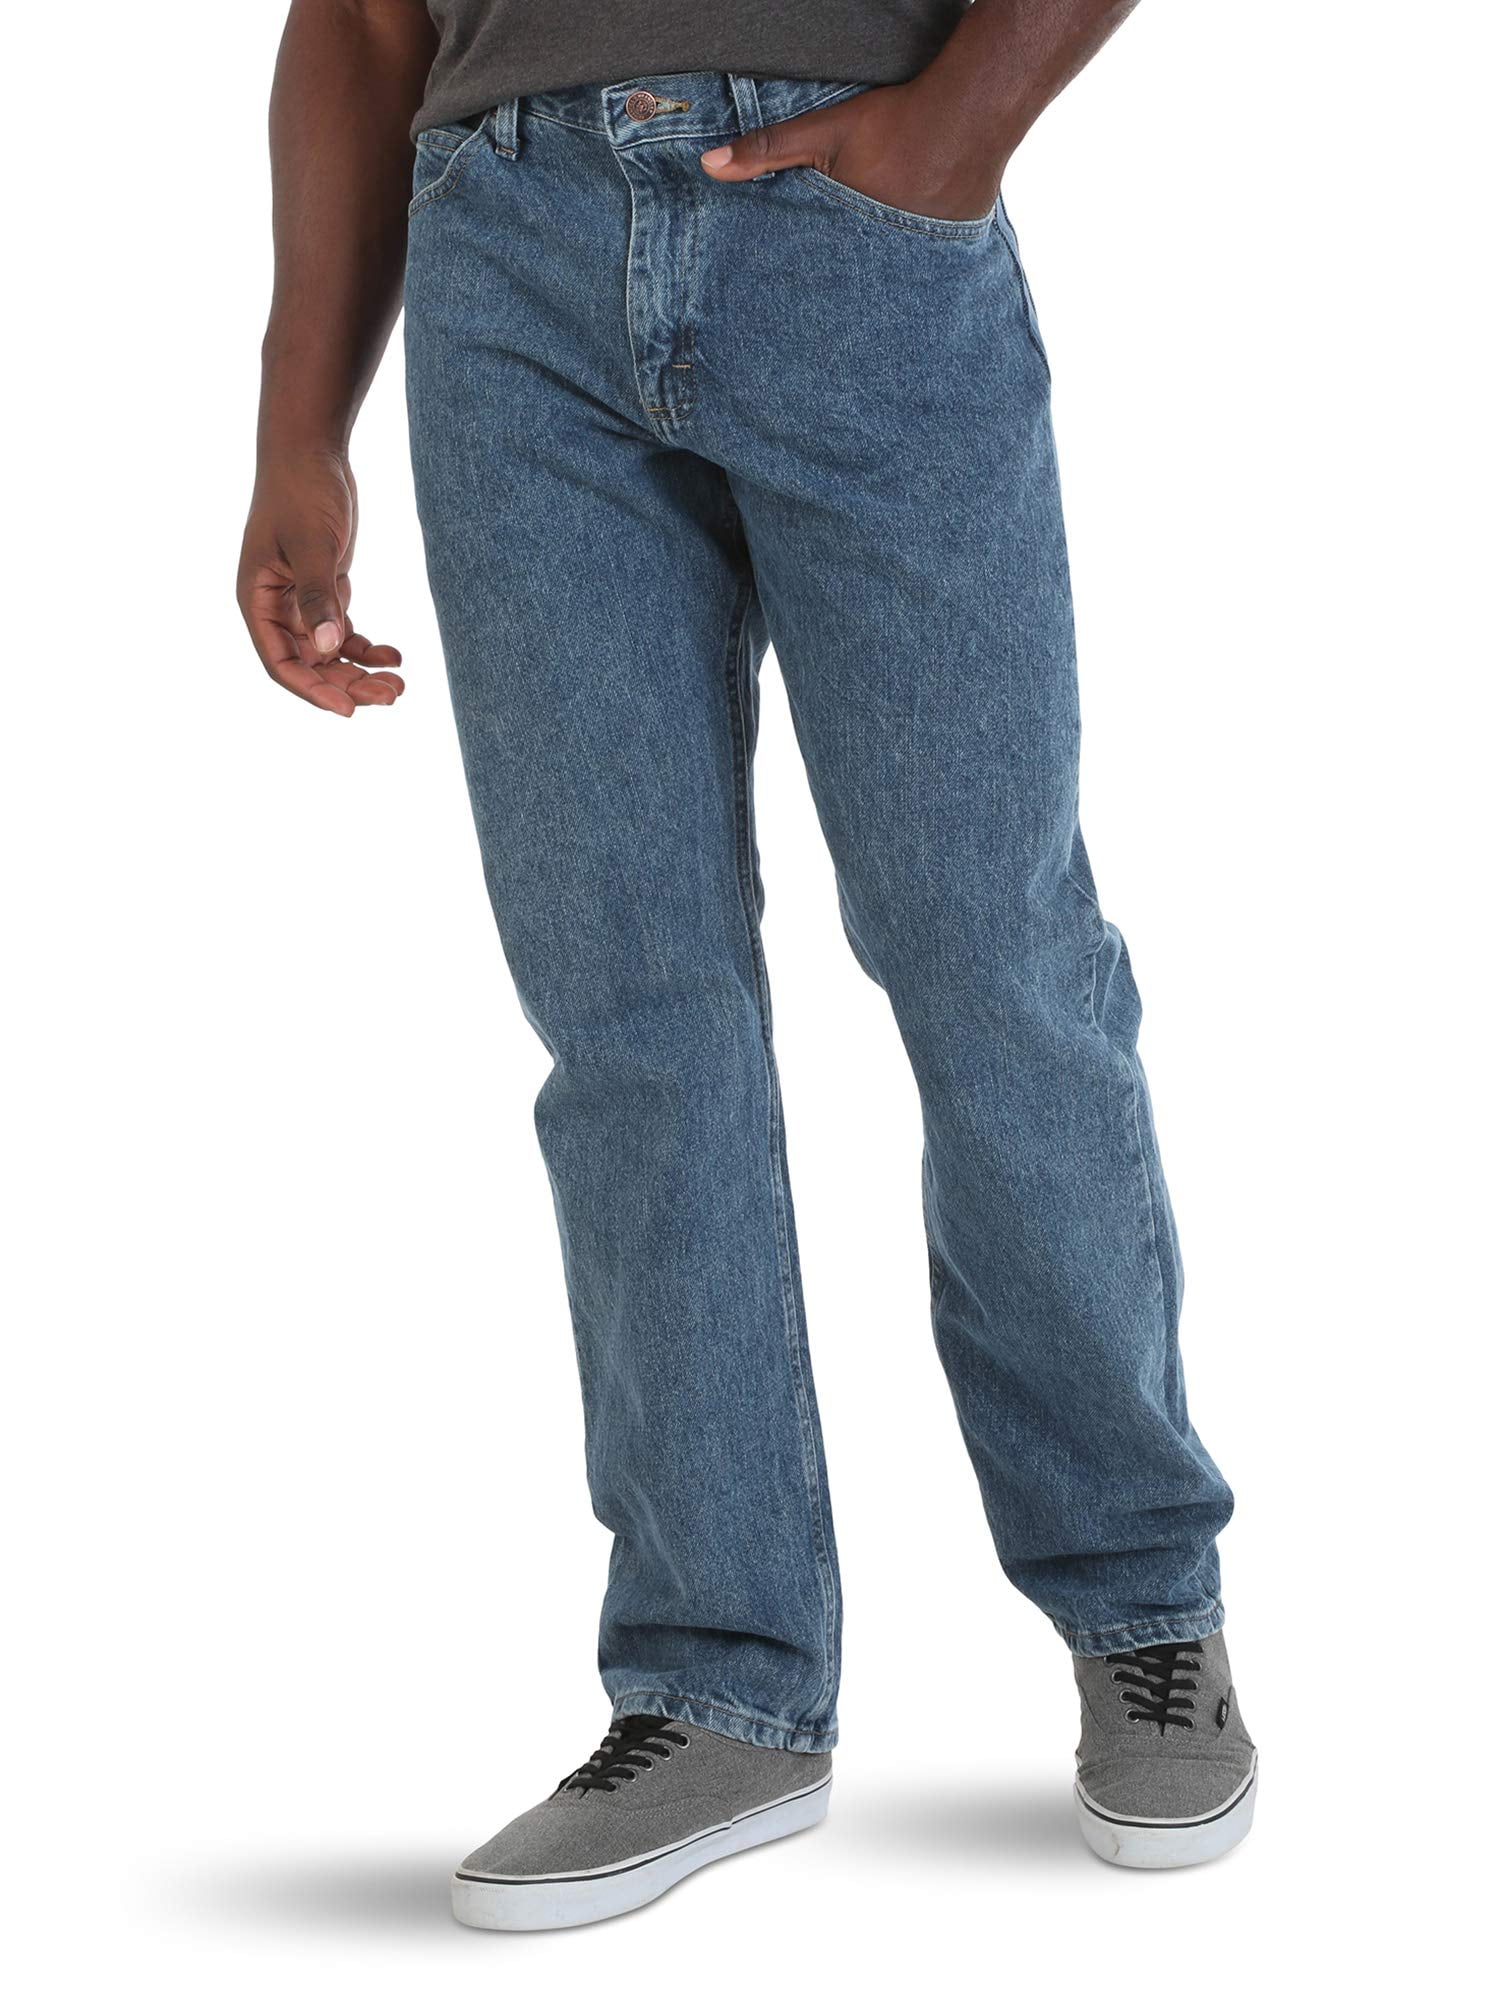 Wrangler Jeans - Wrangler Mens 30x32 Relaxed Fit Stretch Denim Jeans ...